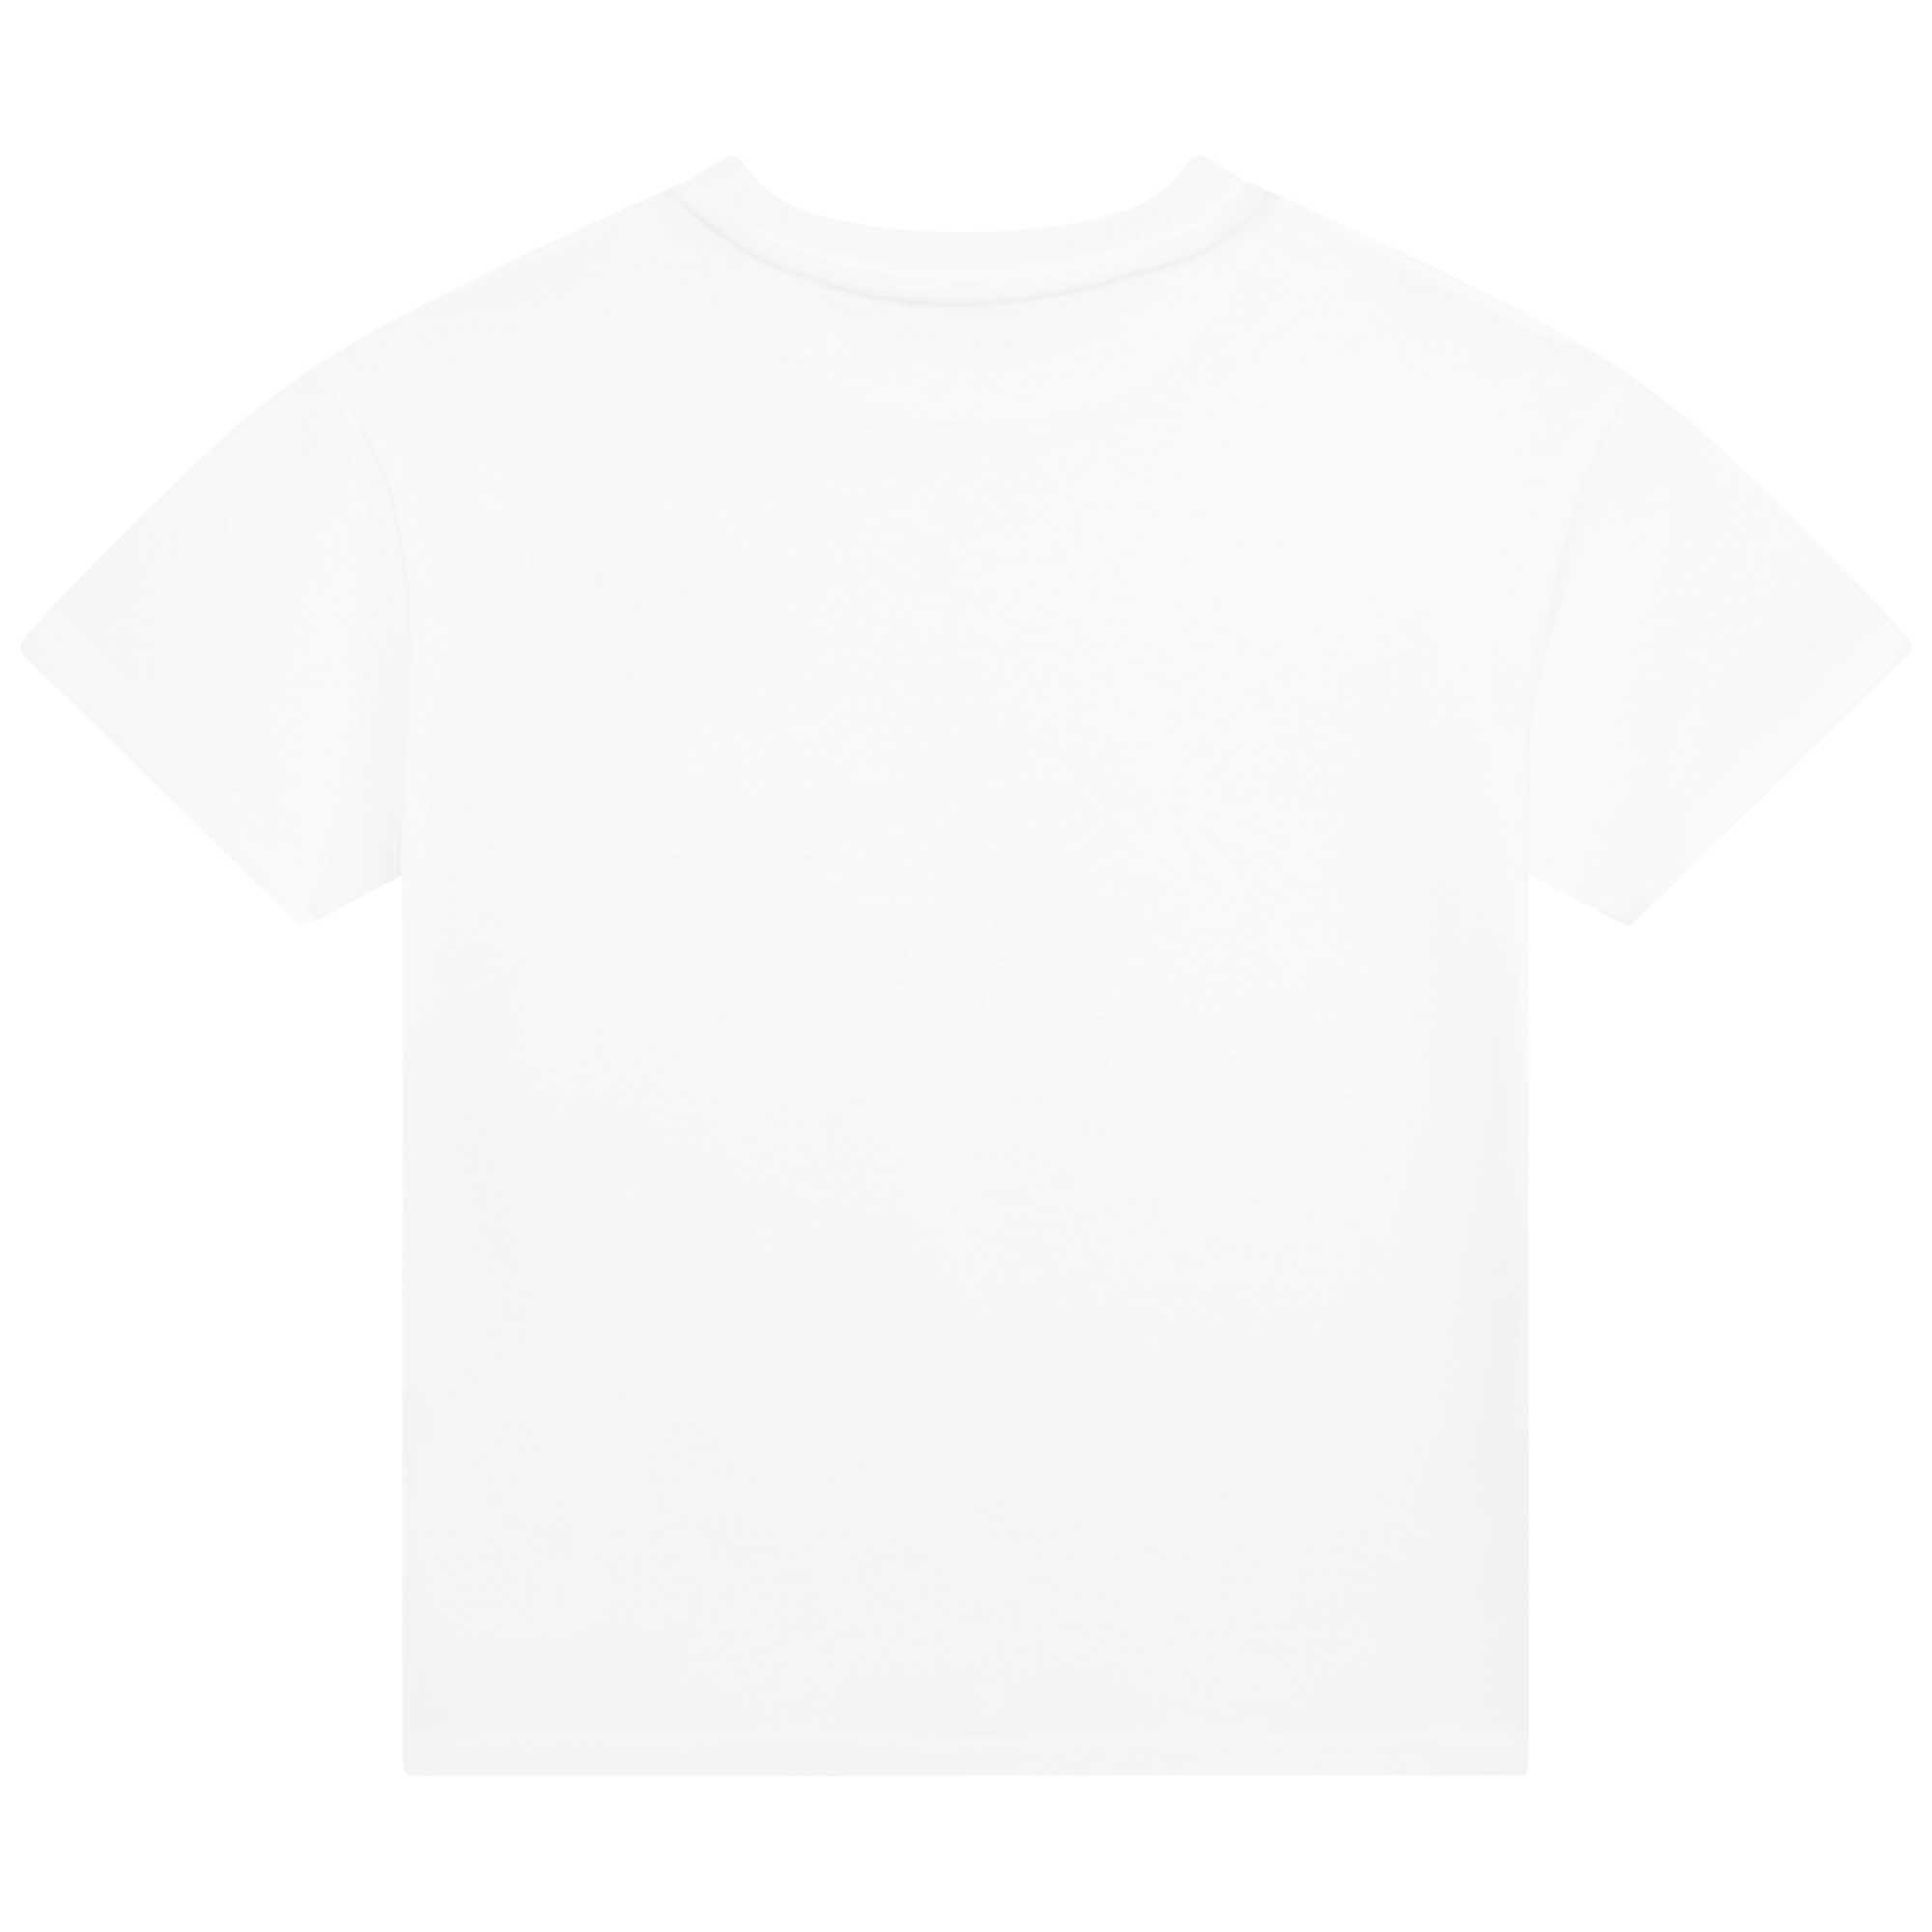 Kenzo Kids T-Shirt Wit Logo